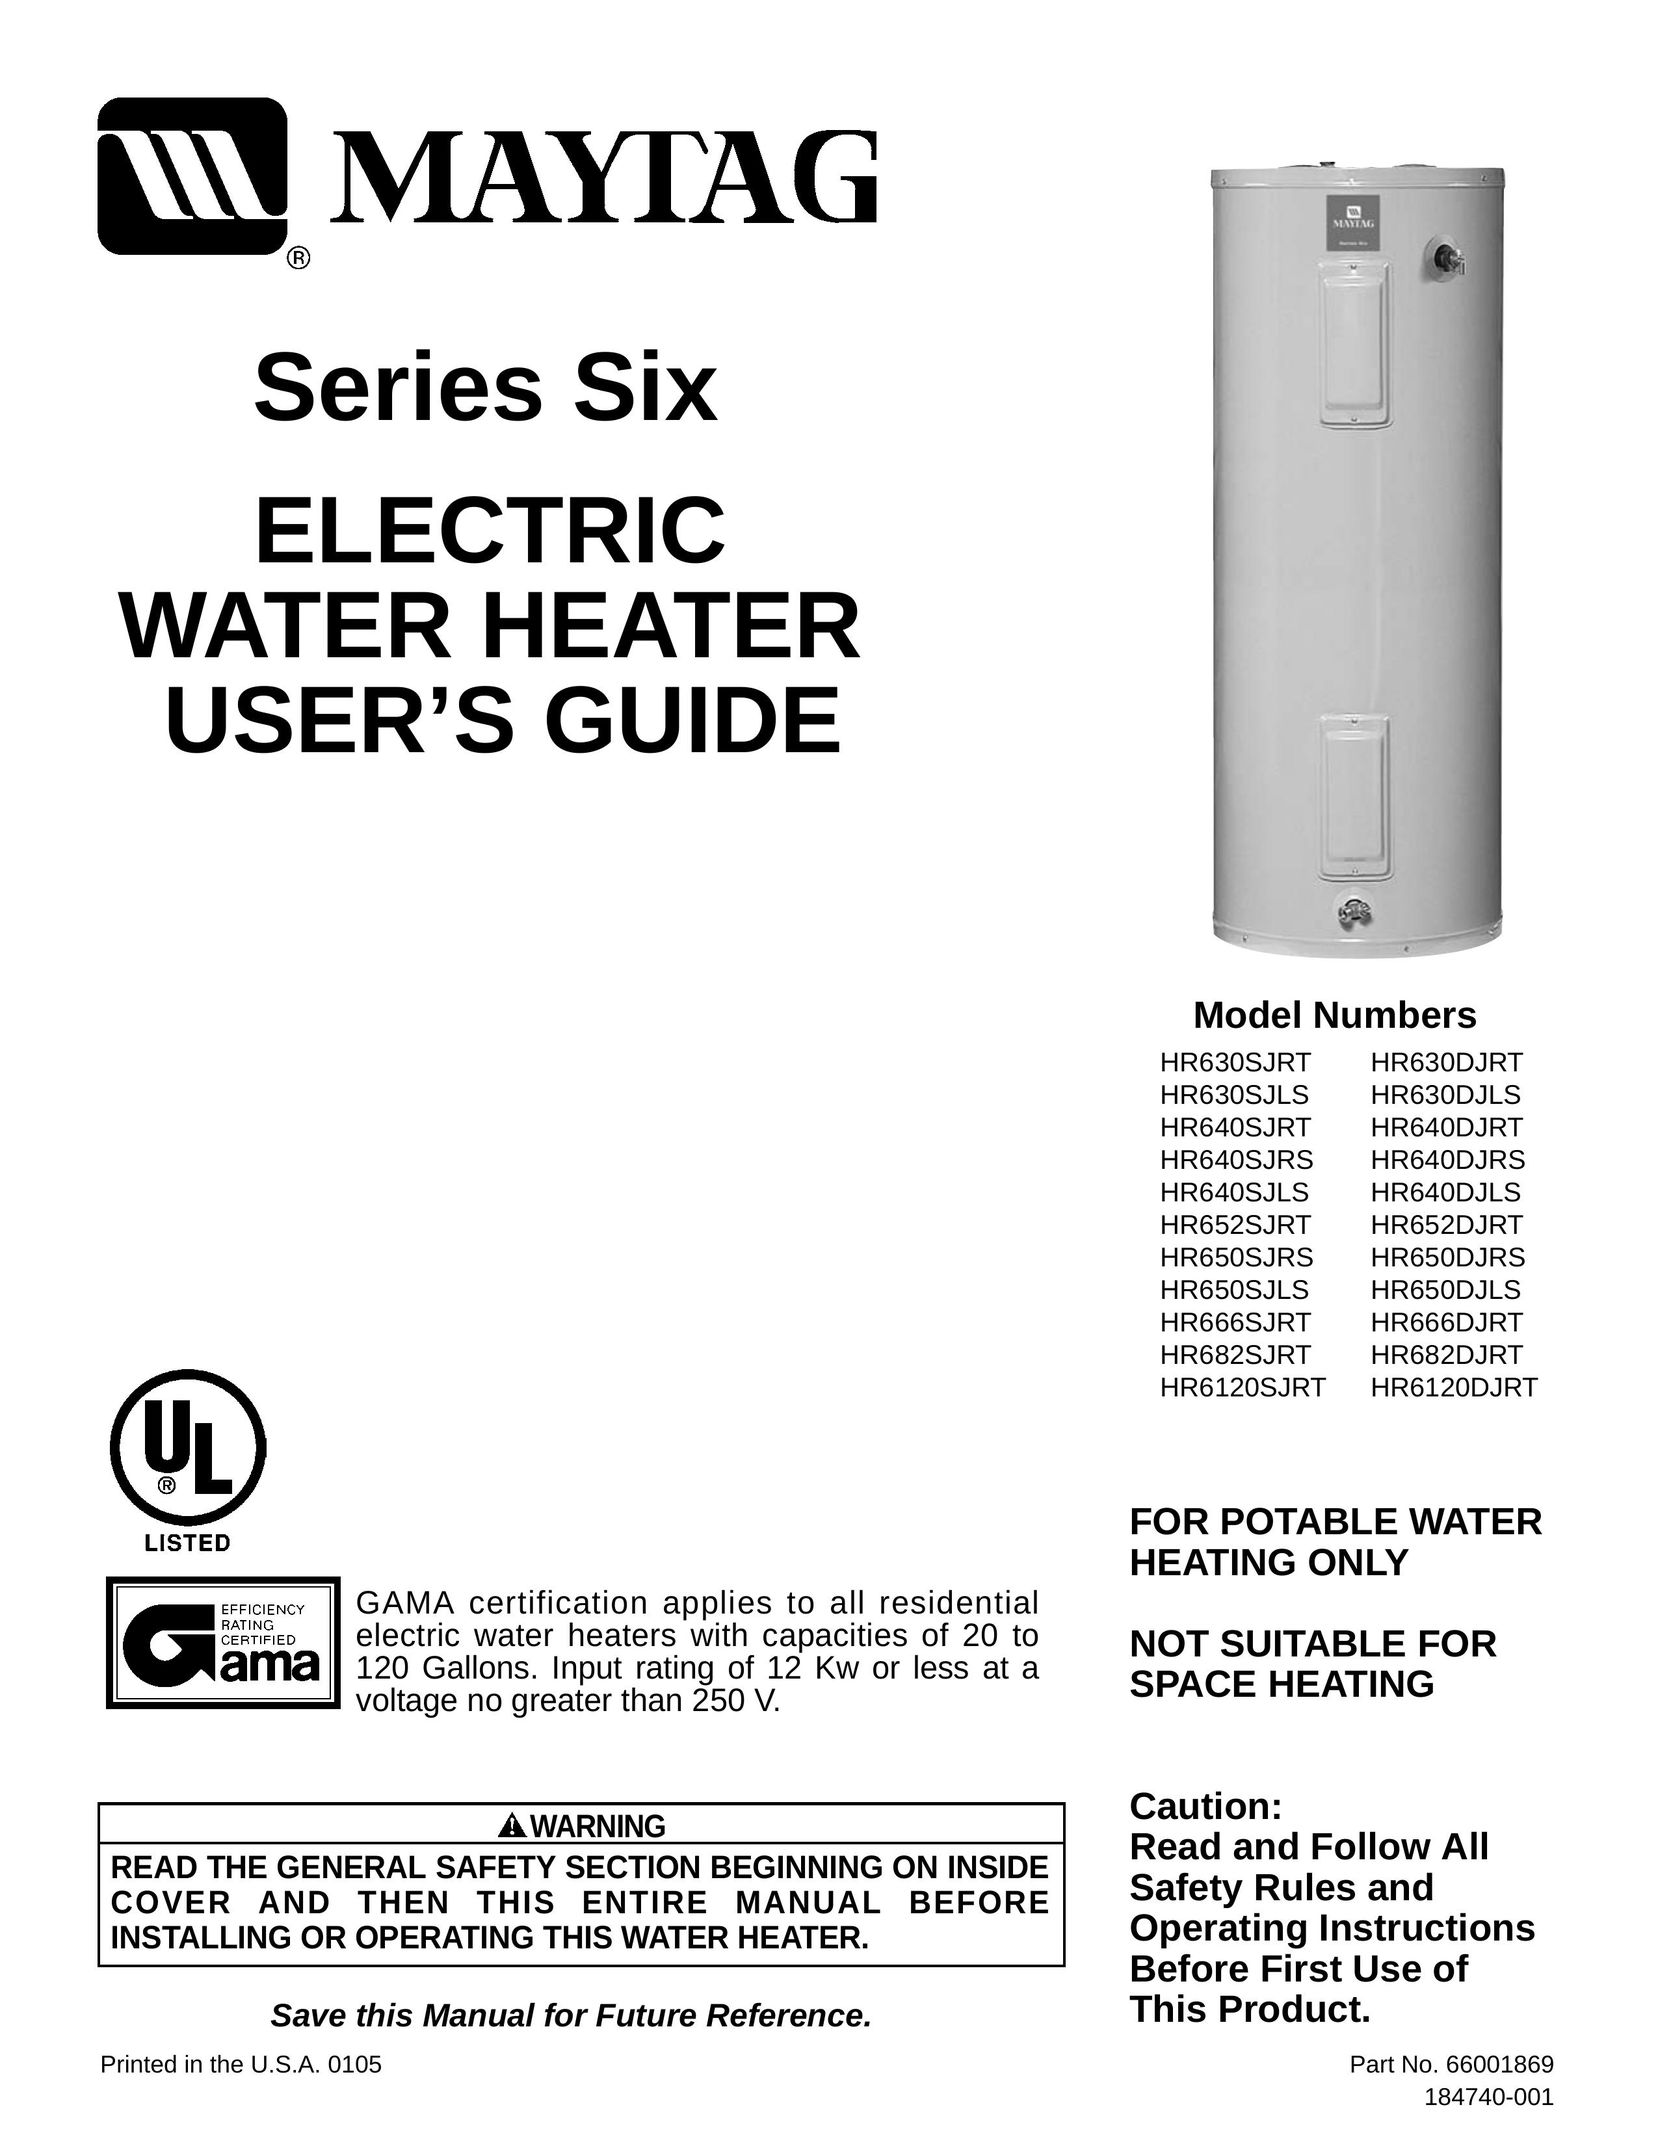 Maytag HR630DJRT Water Heater User Manual